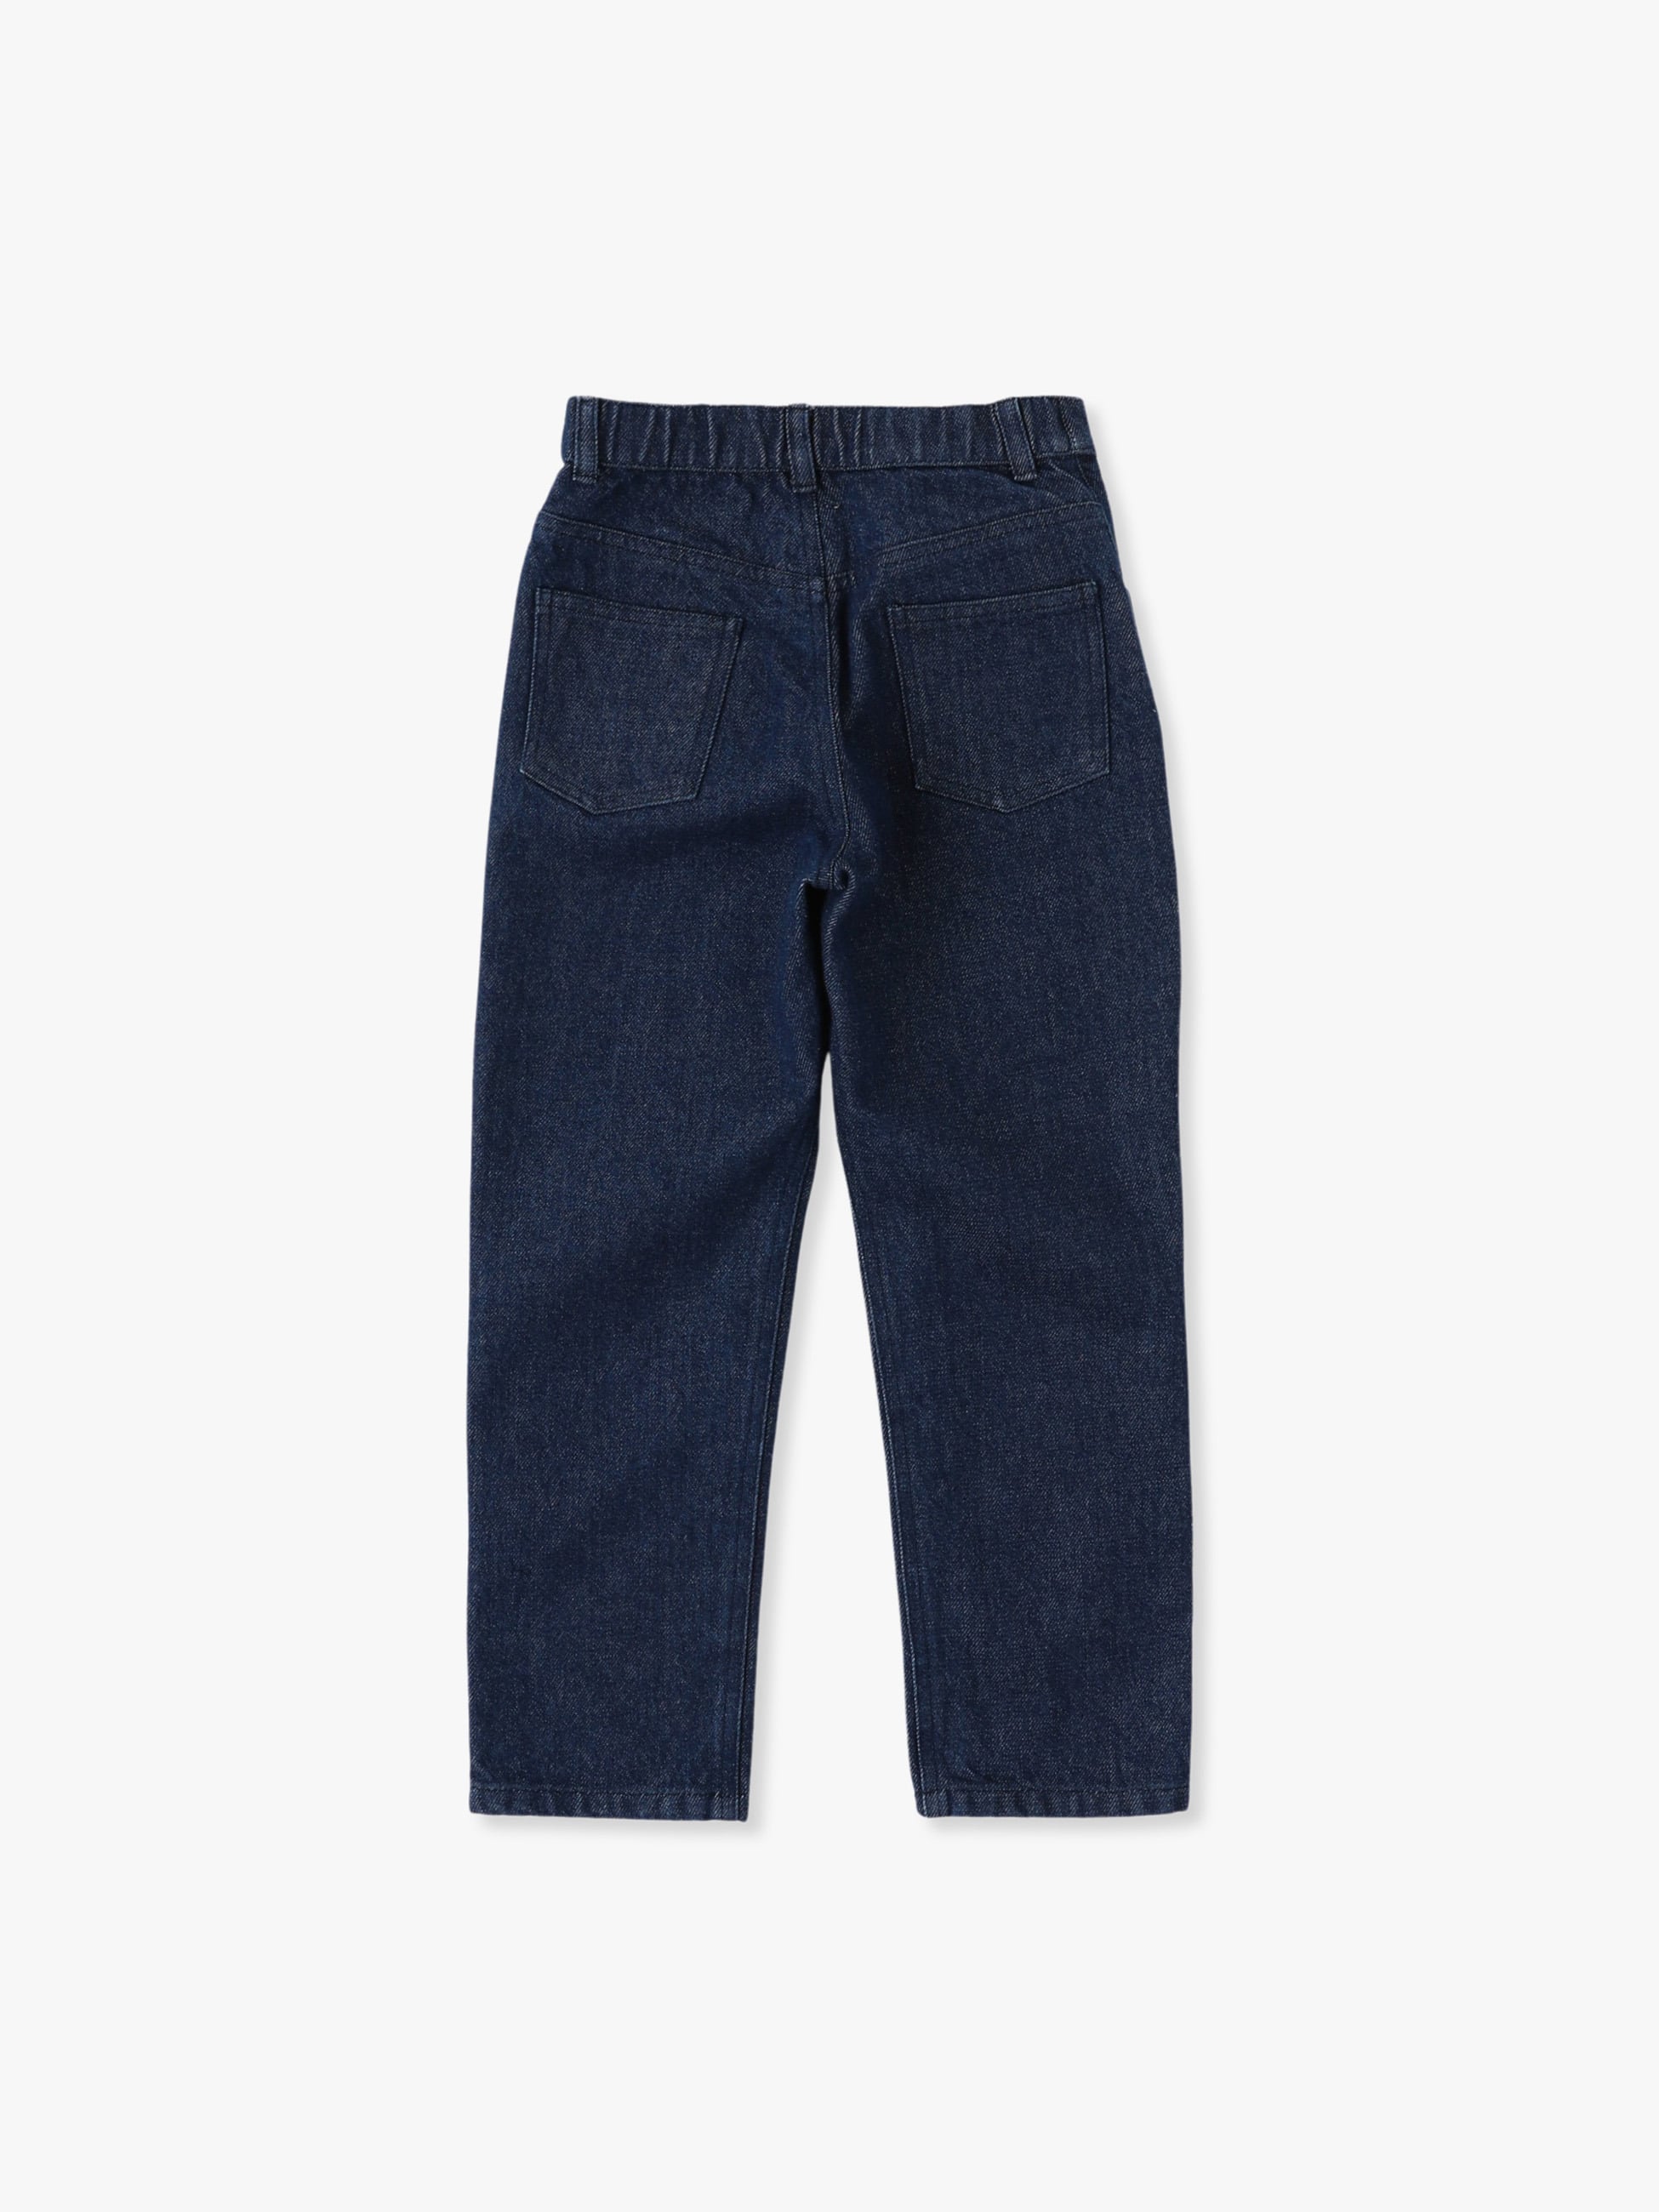 Carpenter Denim Pants (6-7year/multi patchwork) 詳細画像 dark blue 1